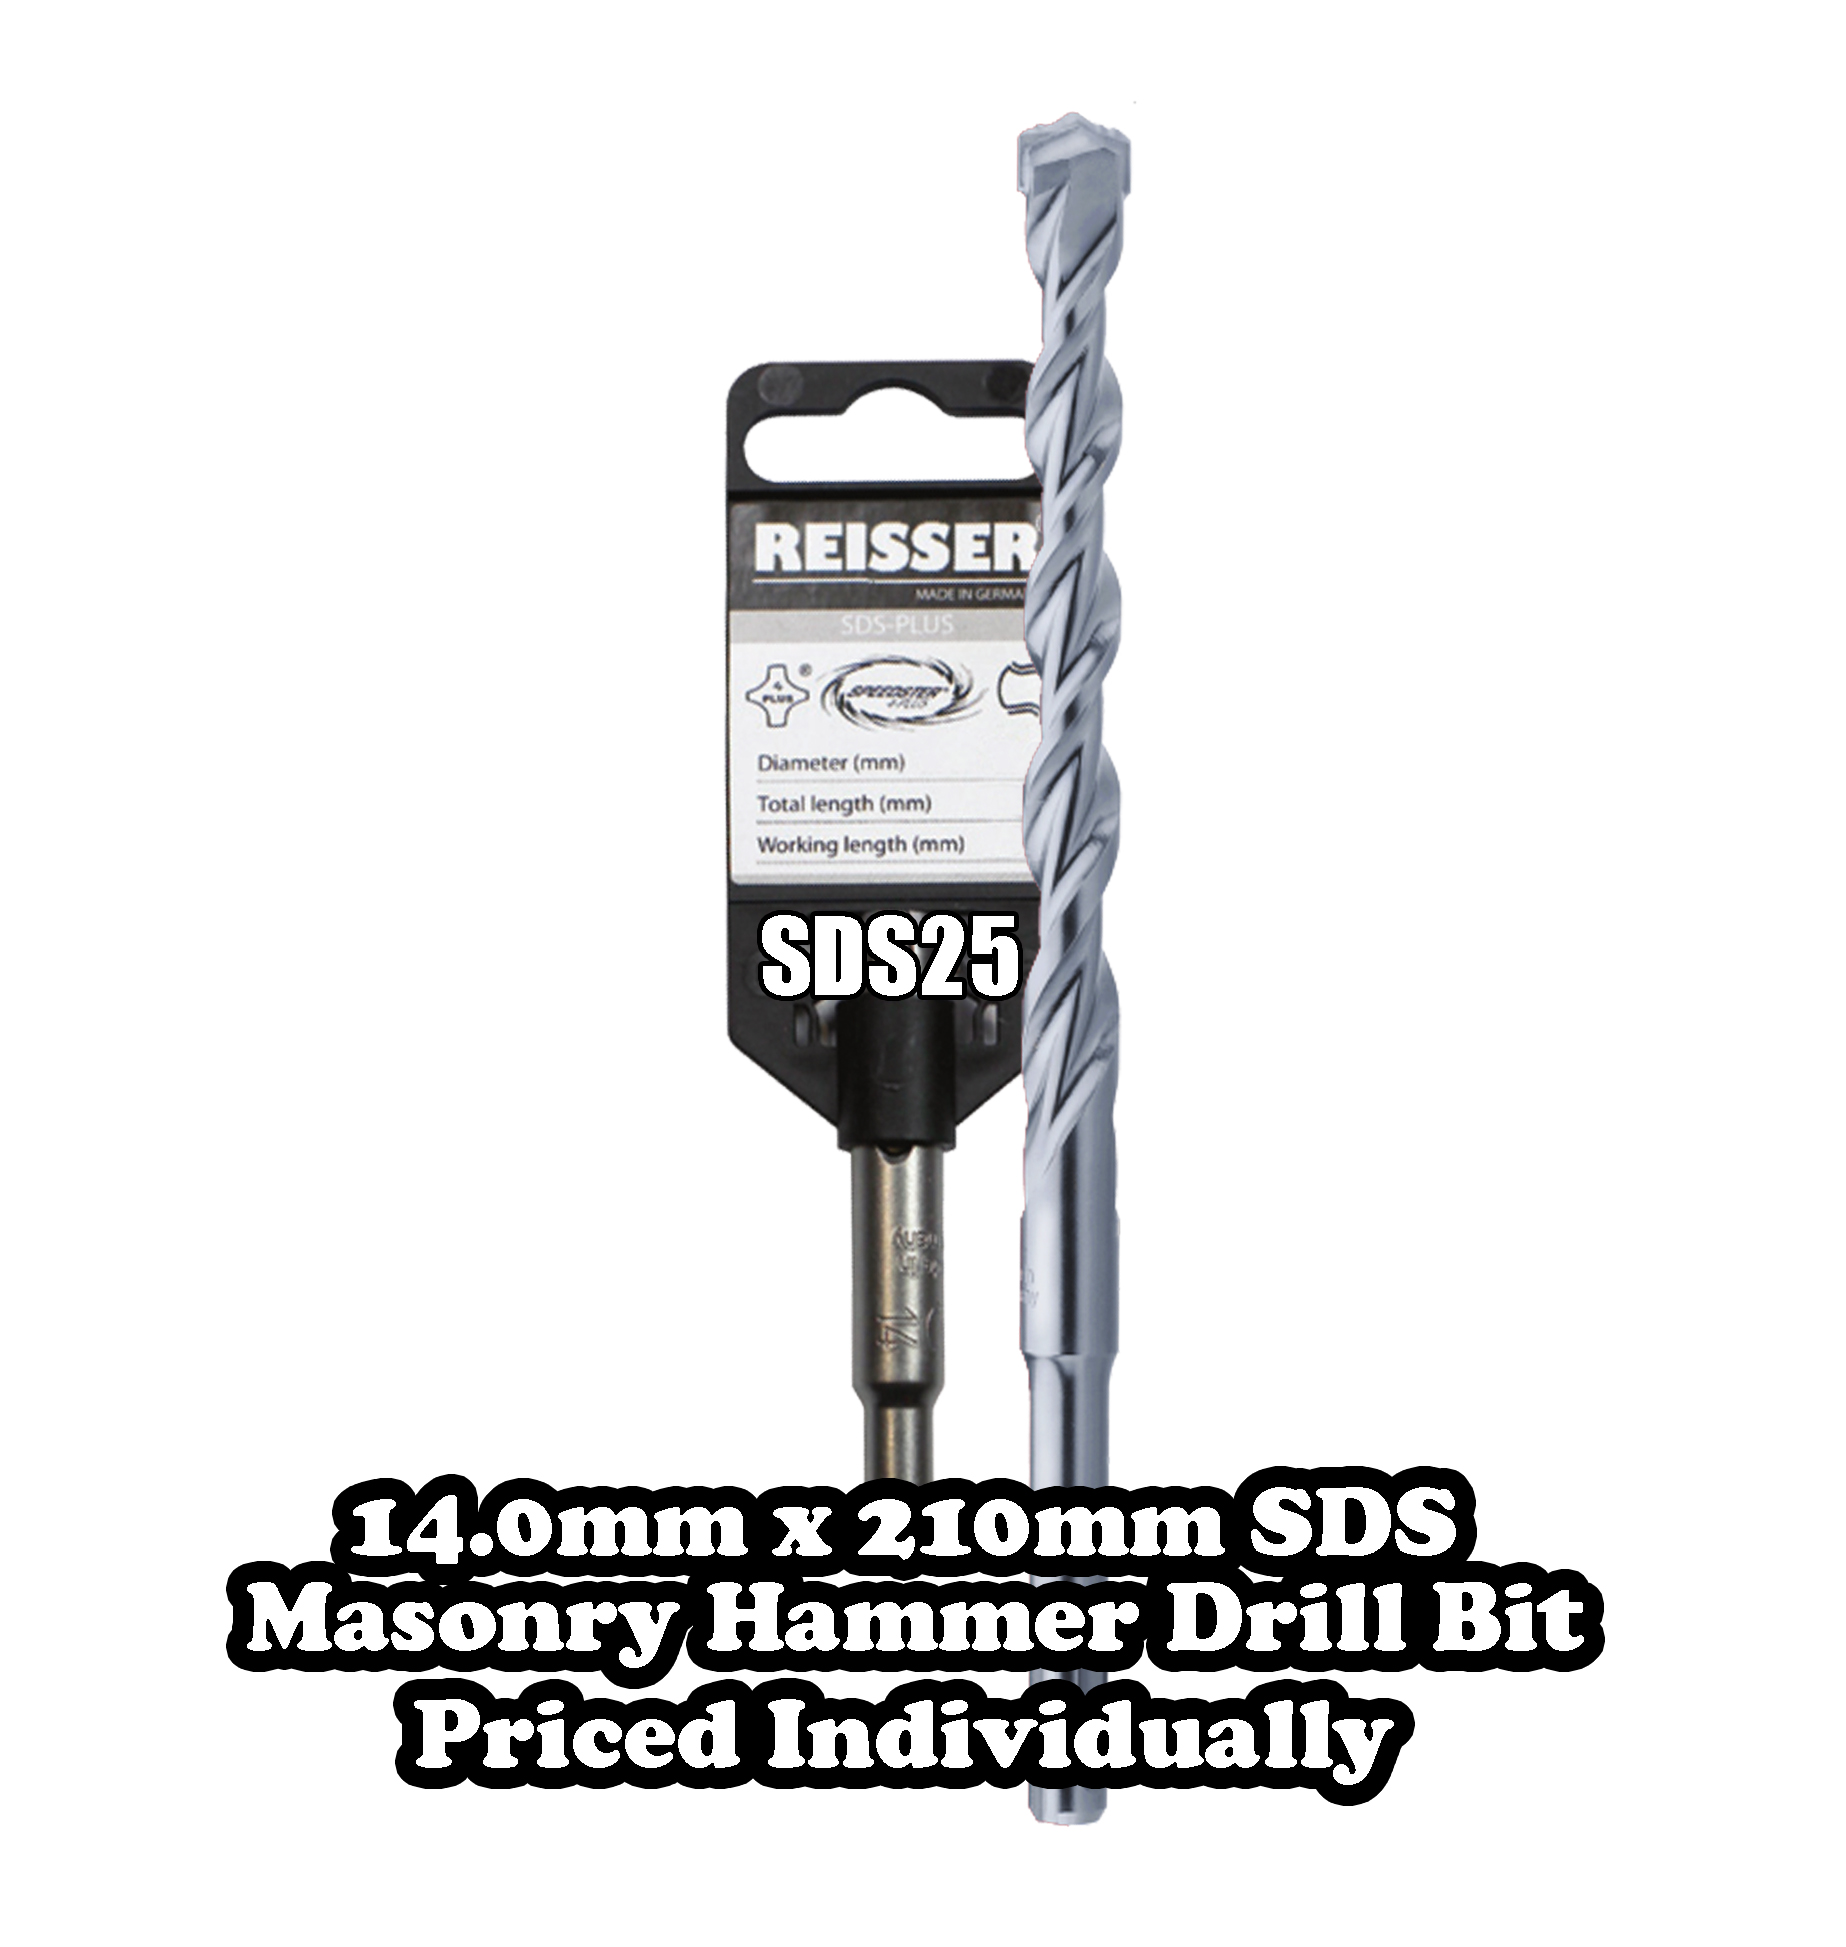 12.0mm x 210mm SDS Masonry Hammer Drill Bit